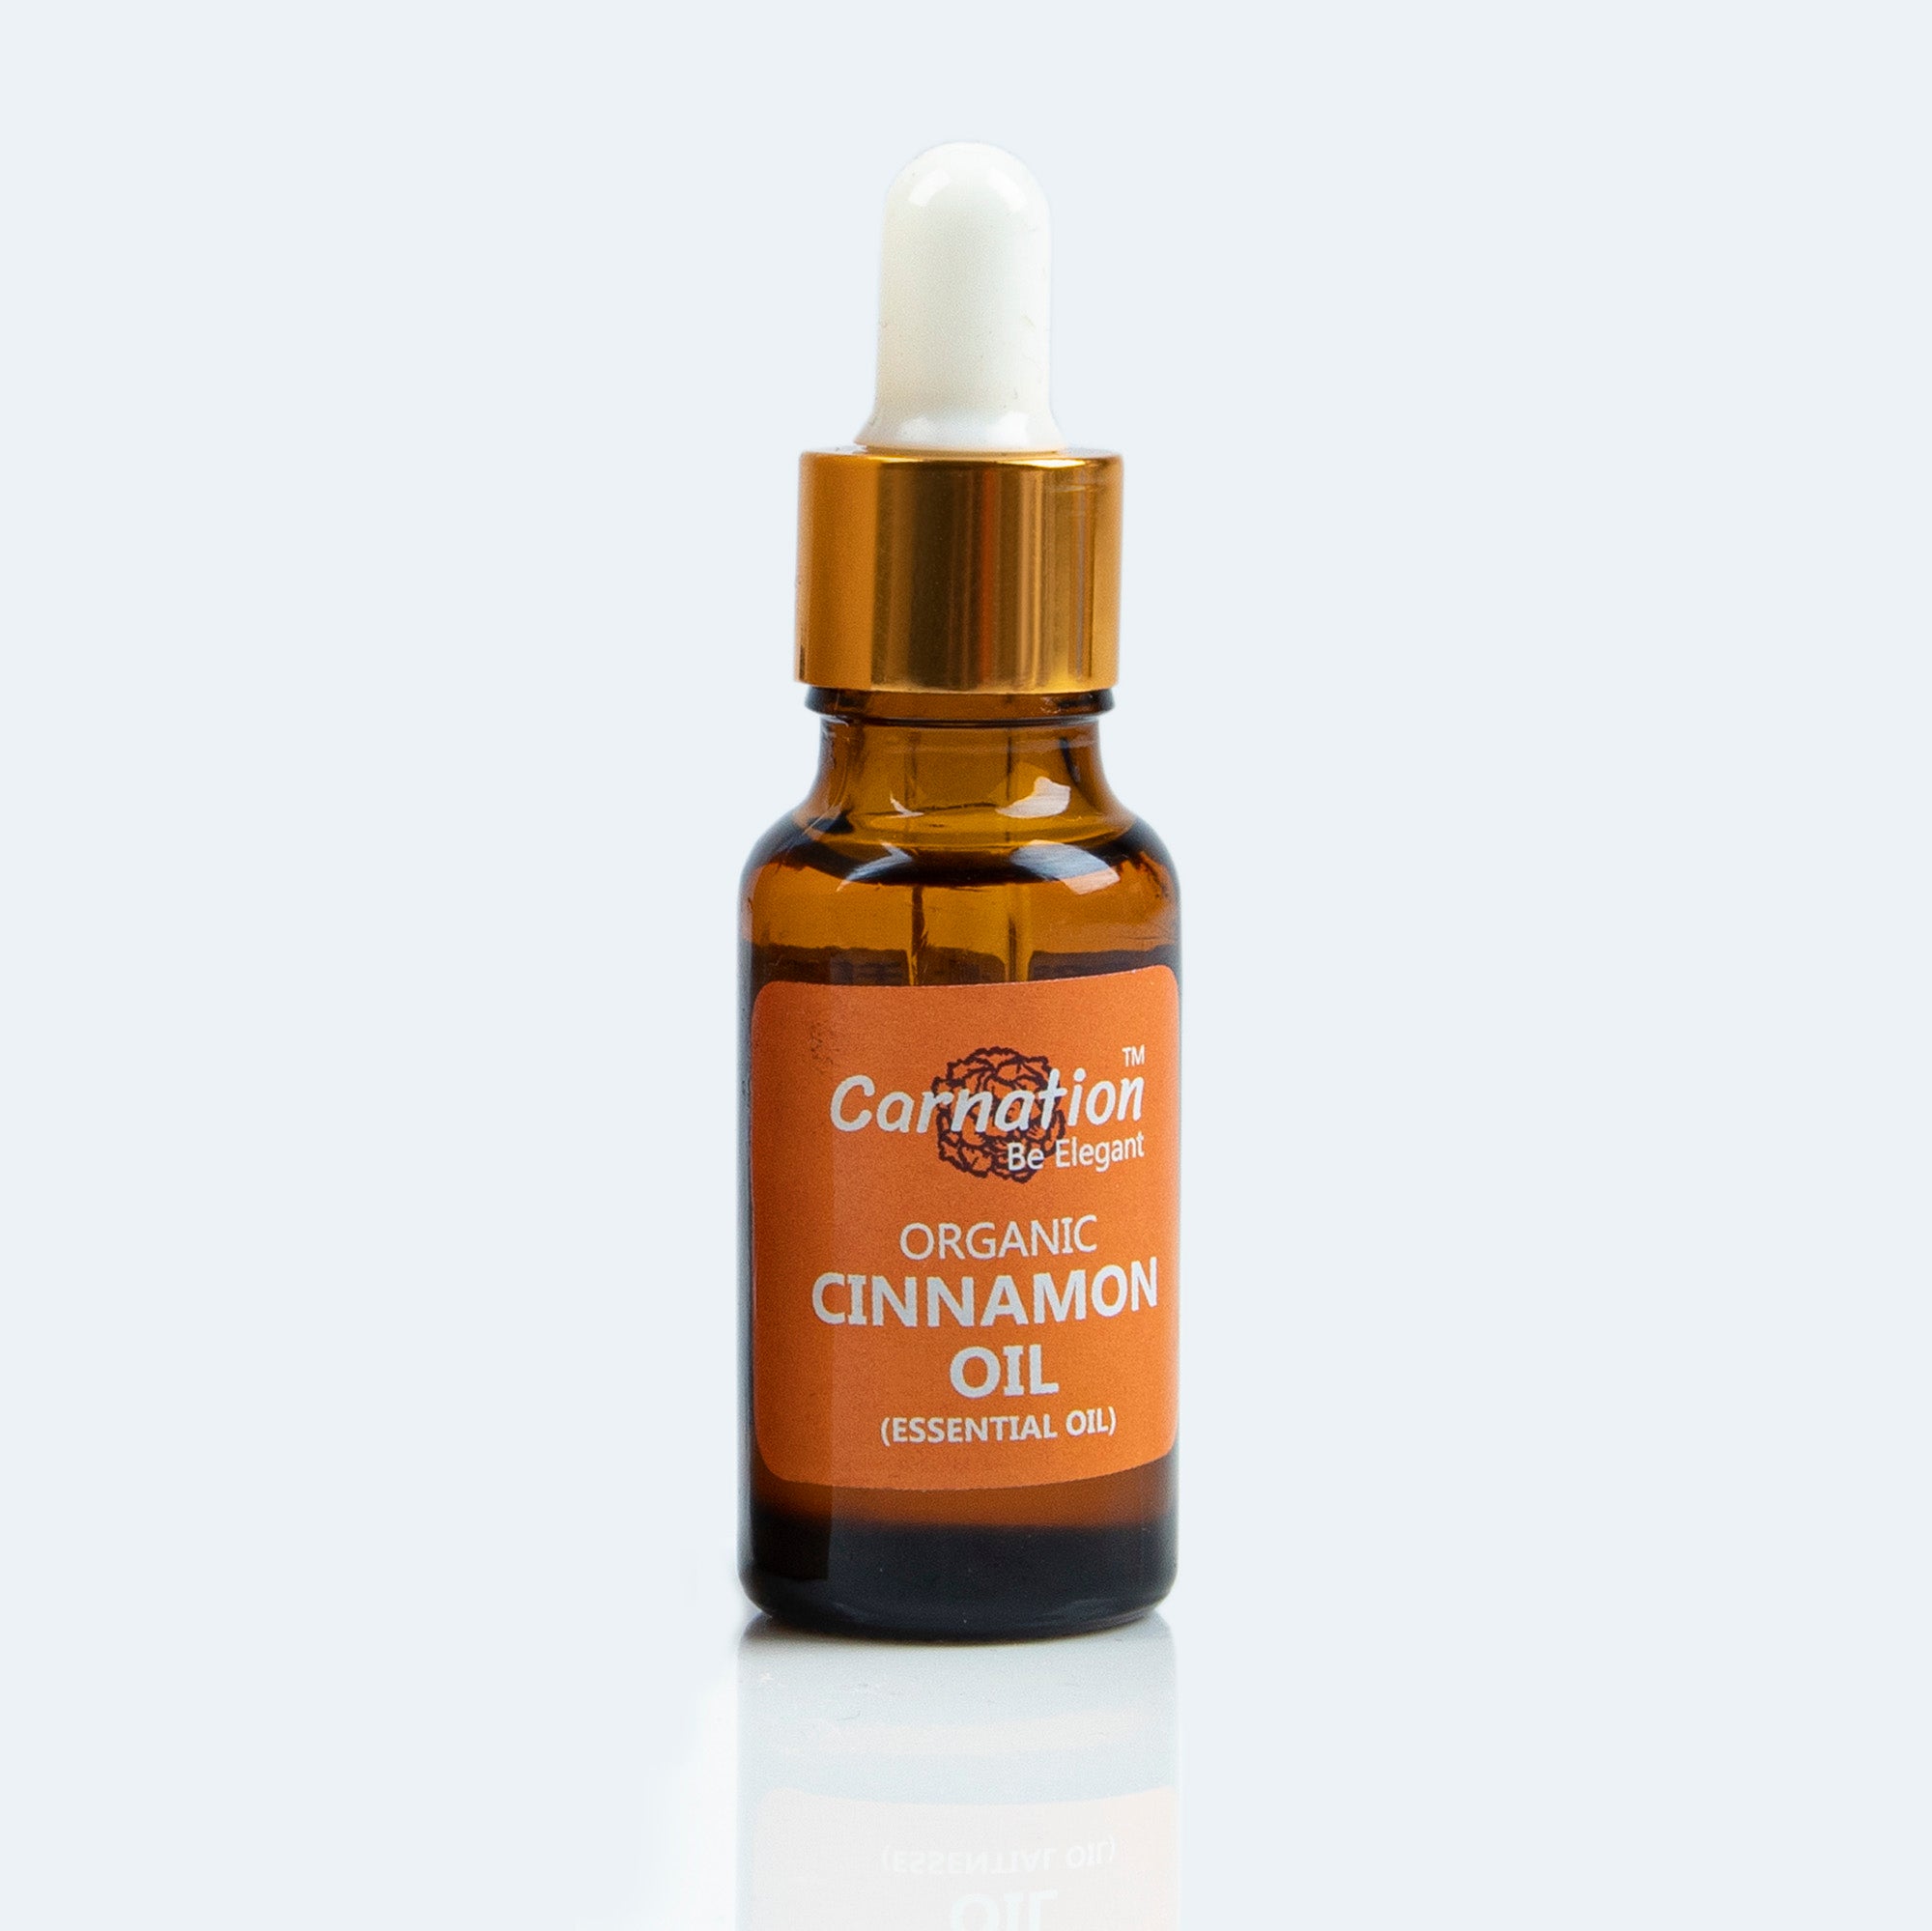 cinnamon oil benefits for skin